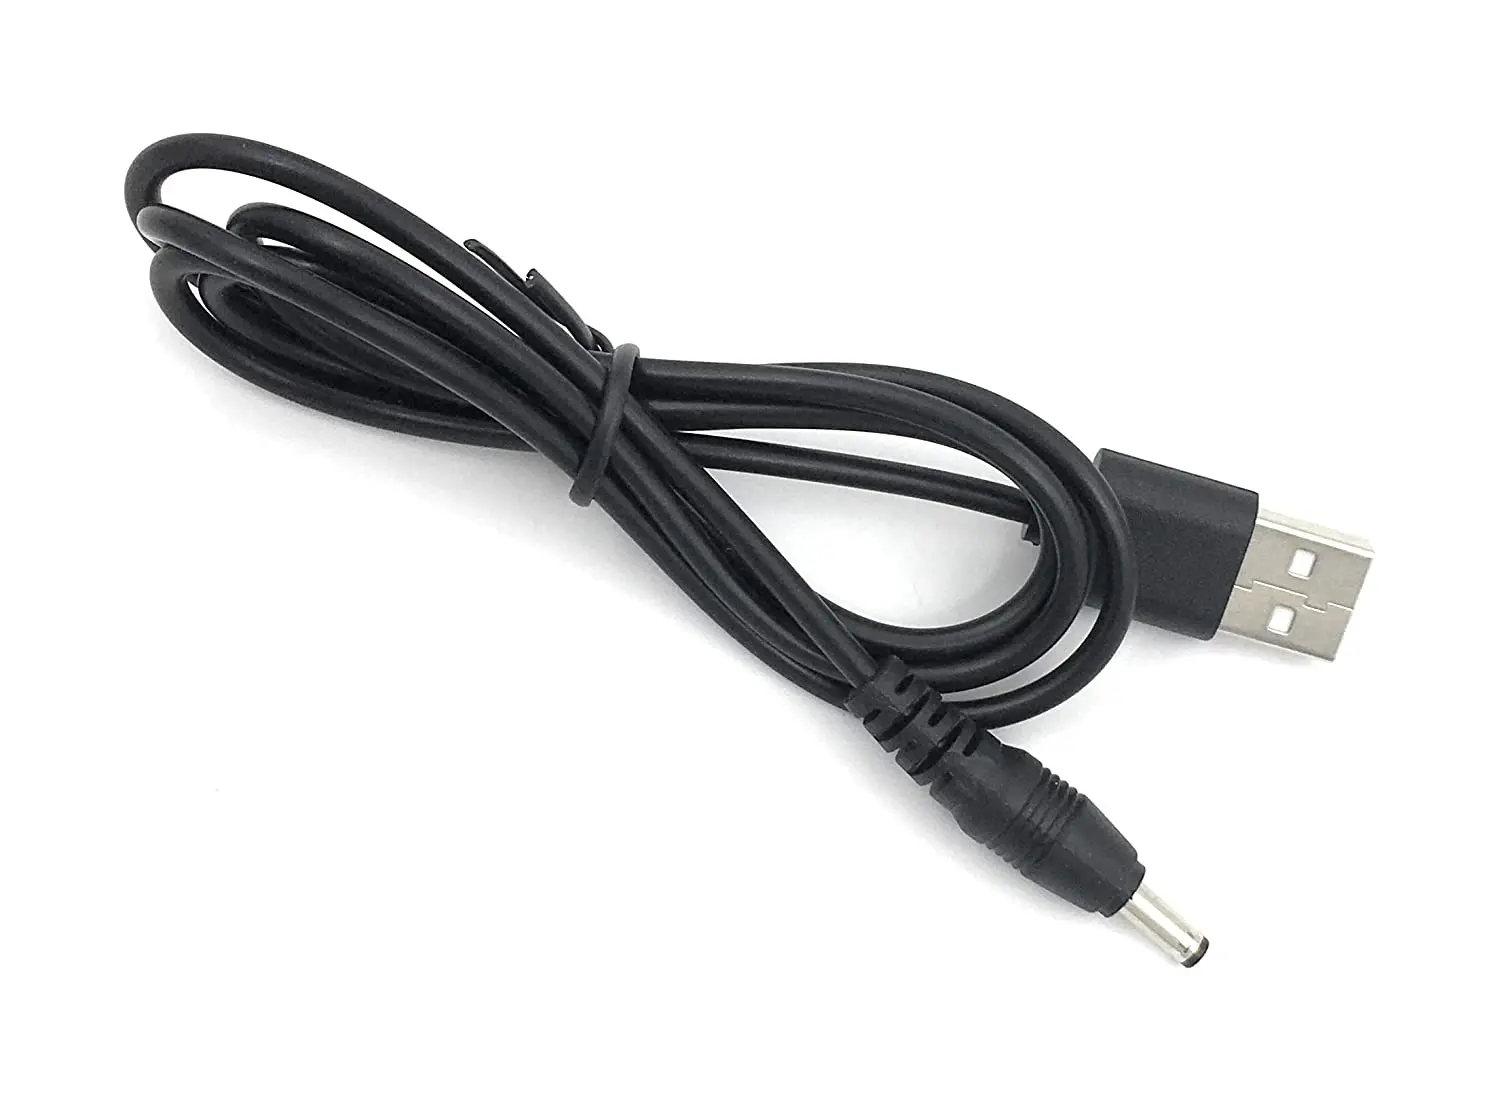 USB-кабель для зарядки Fairywill/KIPOZI/Dnsly/Sboly Sonic dc3.5 * 1 35 мм 3 фута (1 метр) (черный) - купить